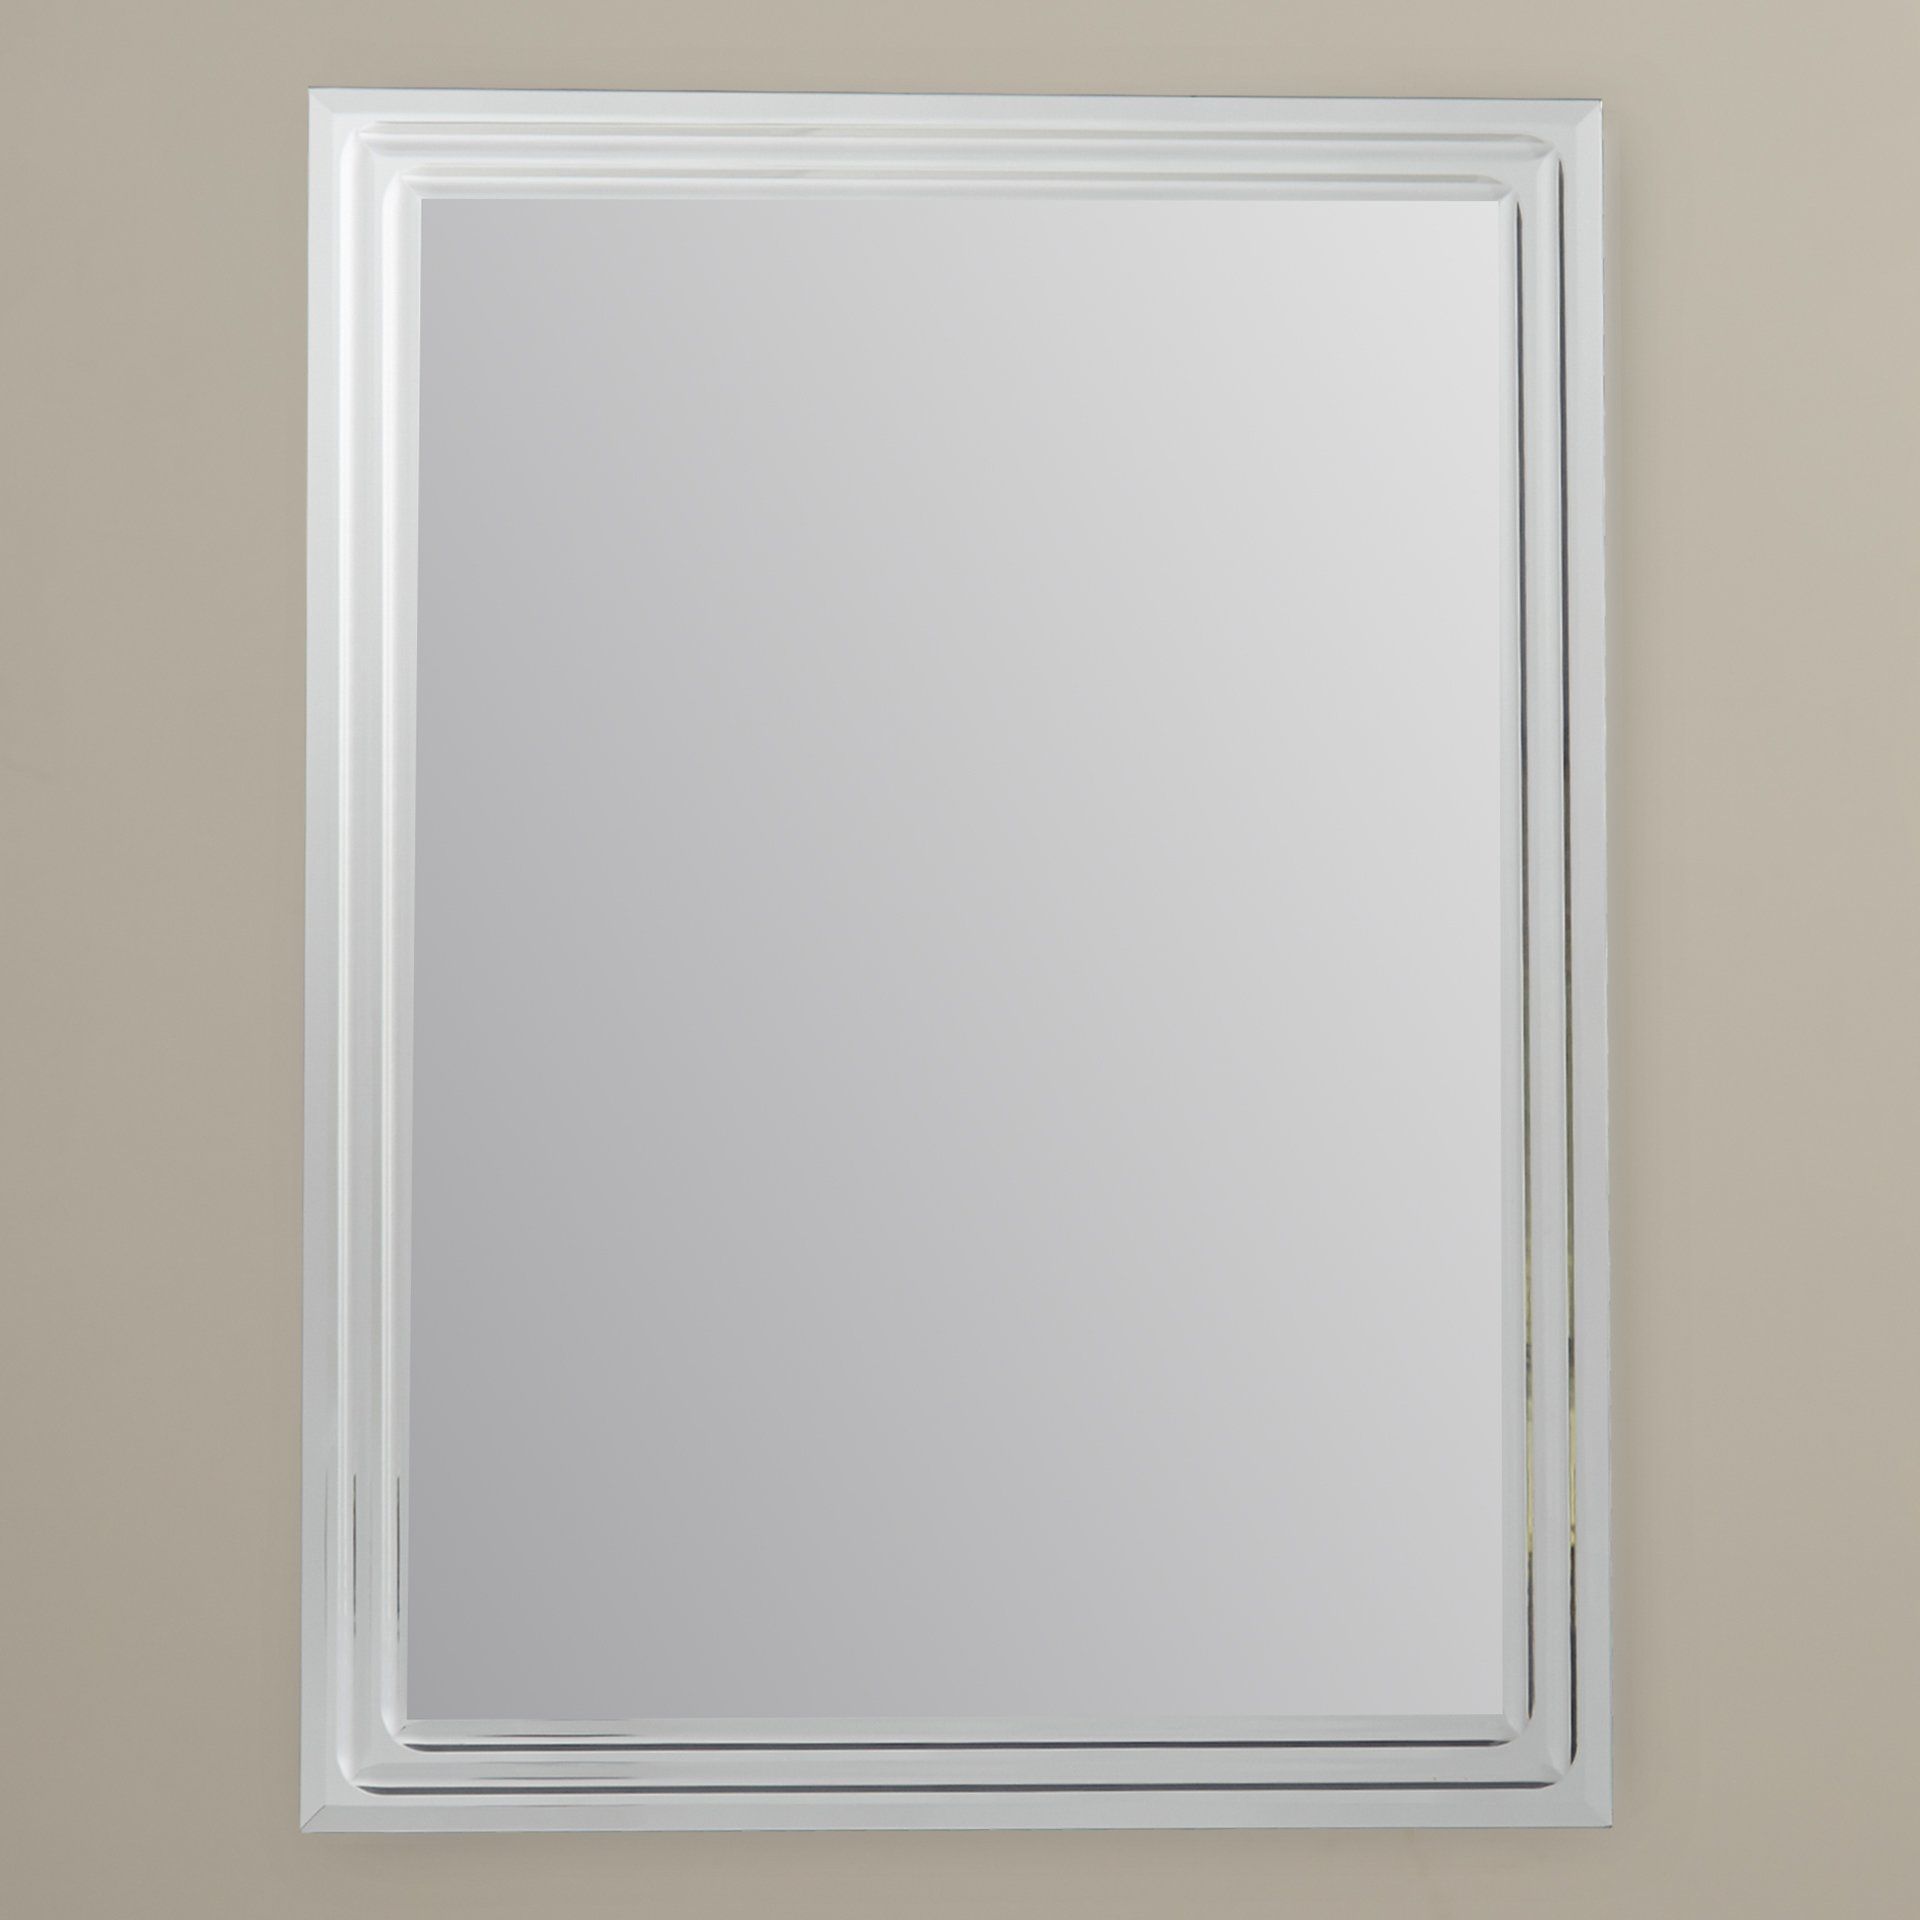 Brayden Studio Frameless Tri Bevel Wall Mirror Reviews Wayfair In Bevel Mirror (Photo 1 of 15)